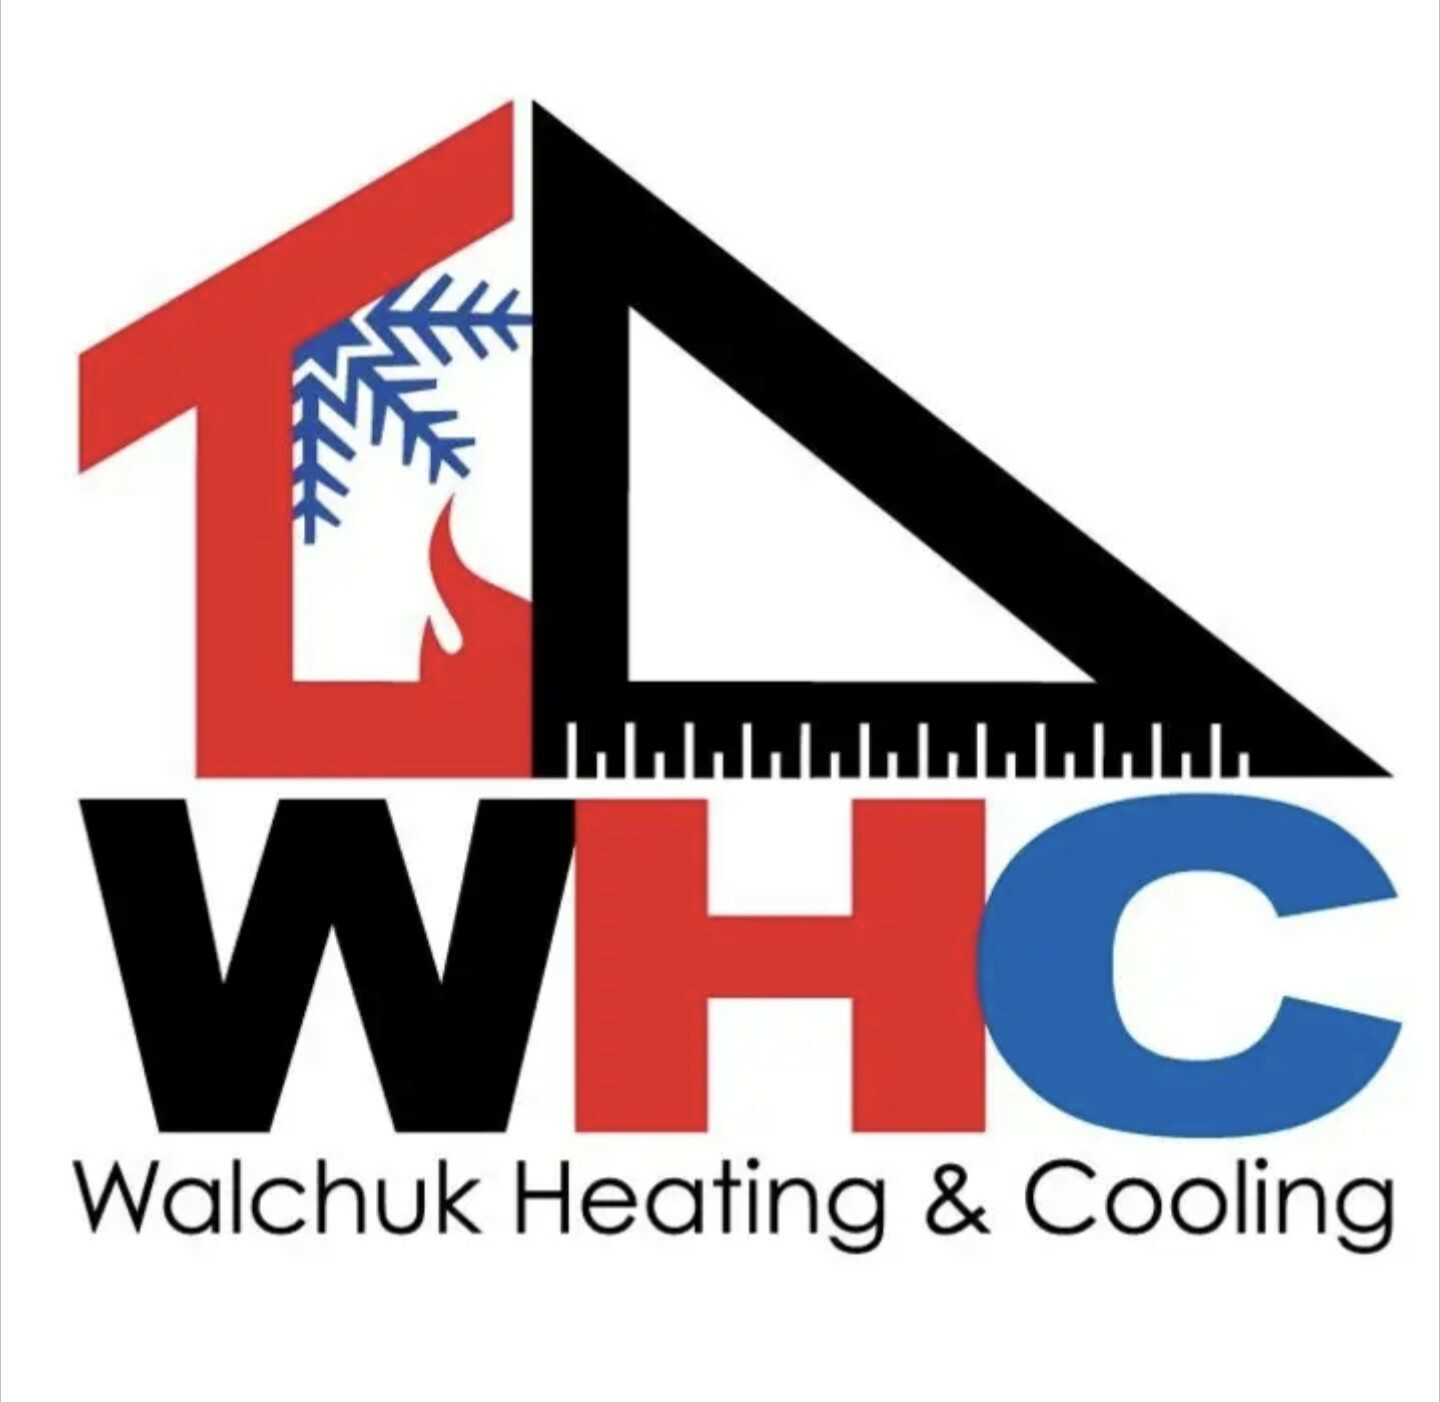 Walchuk Heating and Cooling's logo